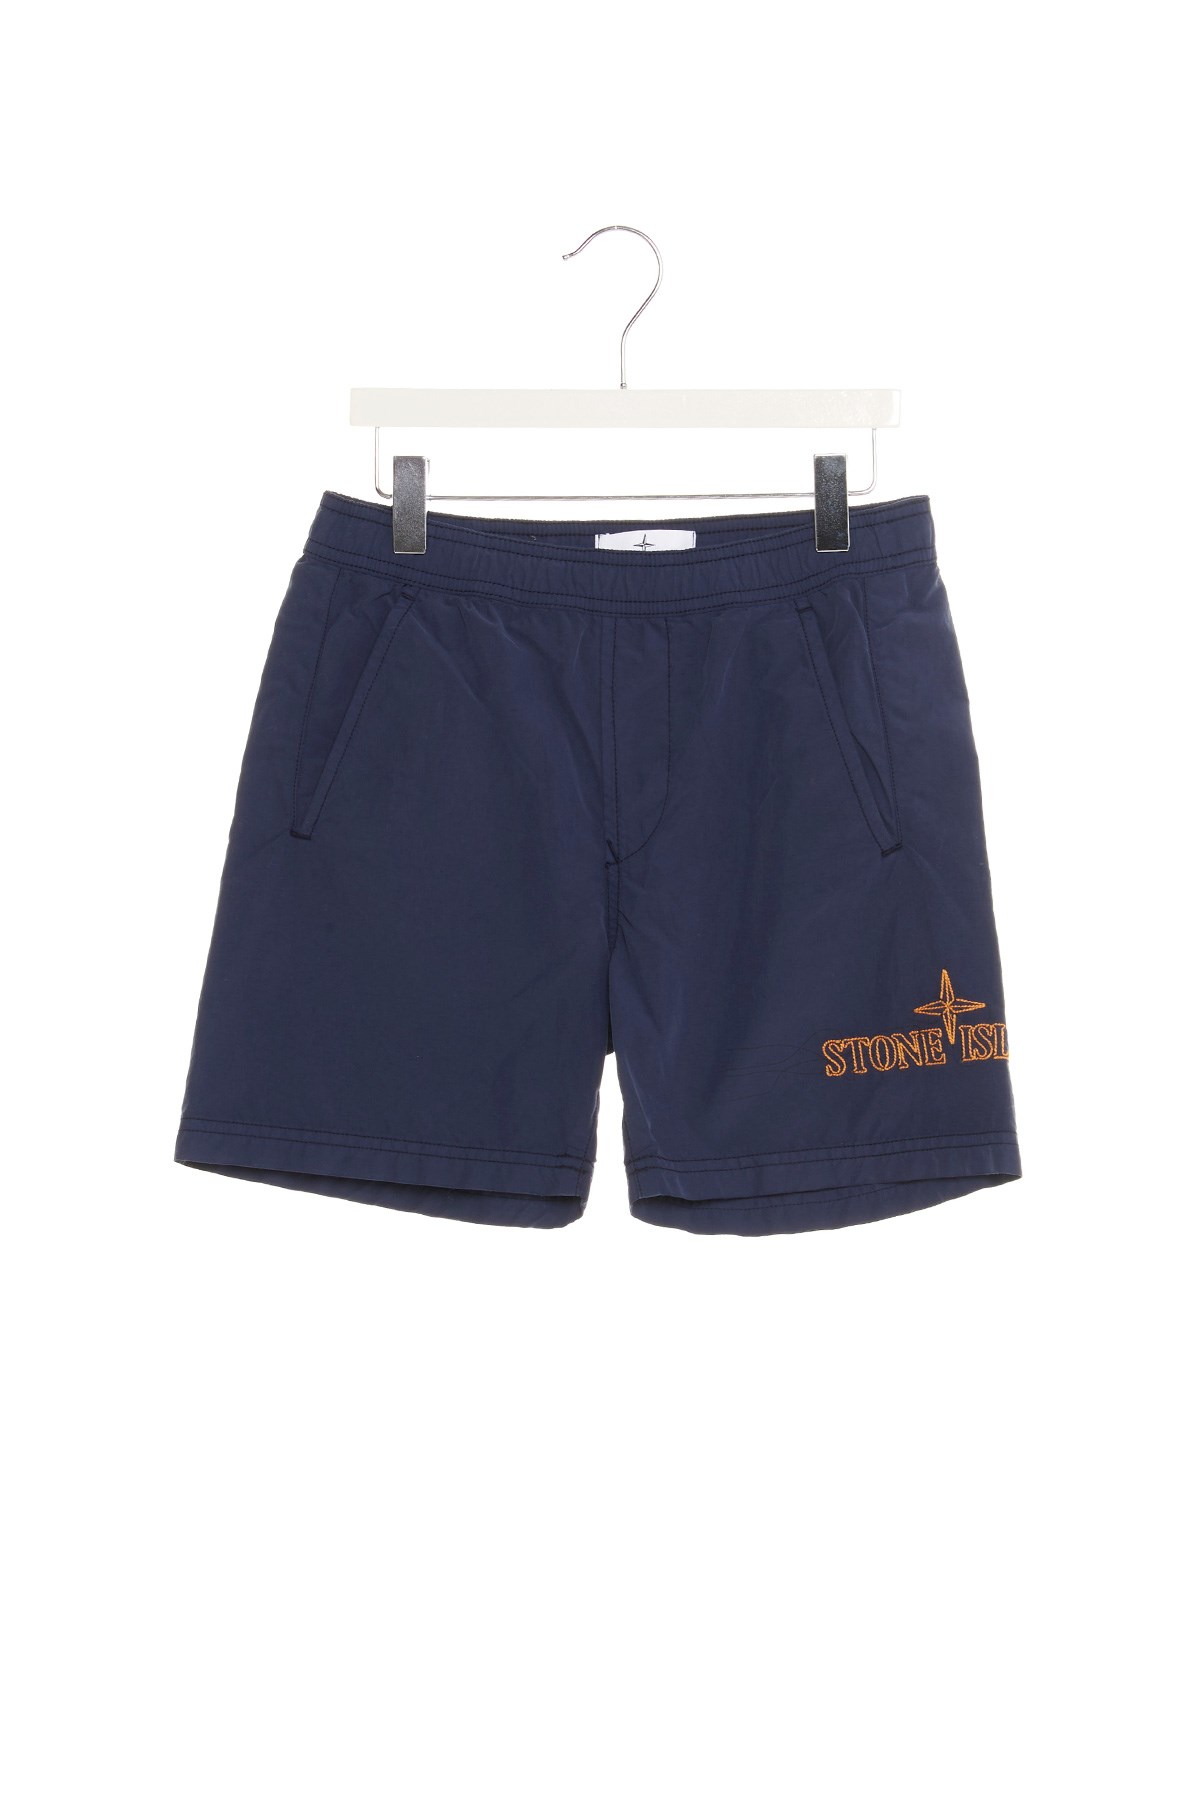 STONE ISLAND JUNIOR Embroidered Logo Beach Boxer Shorts